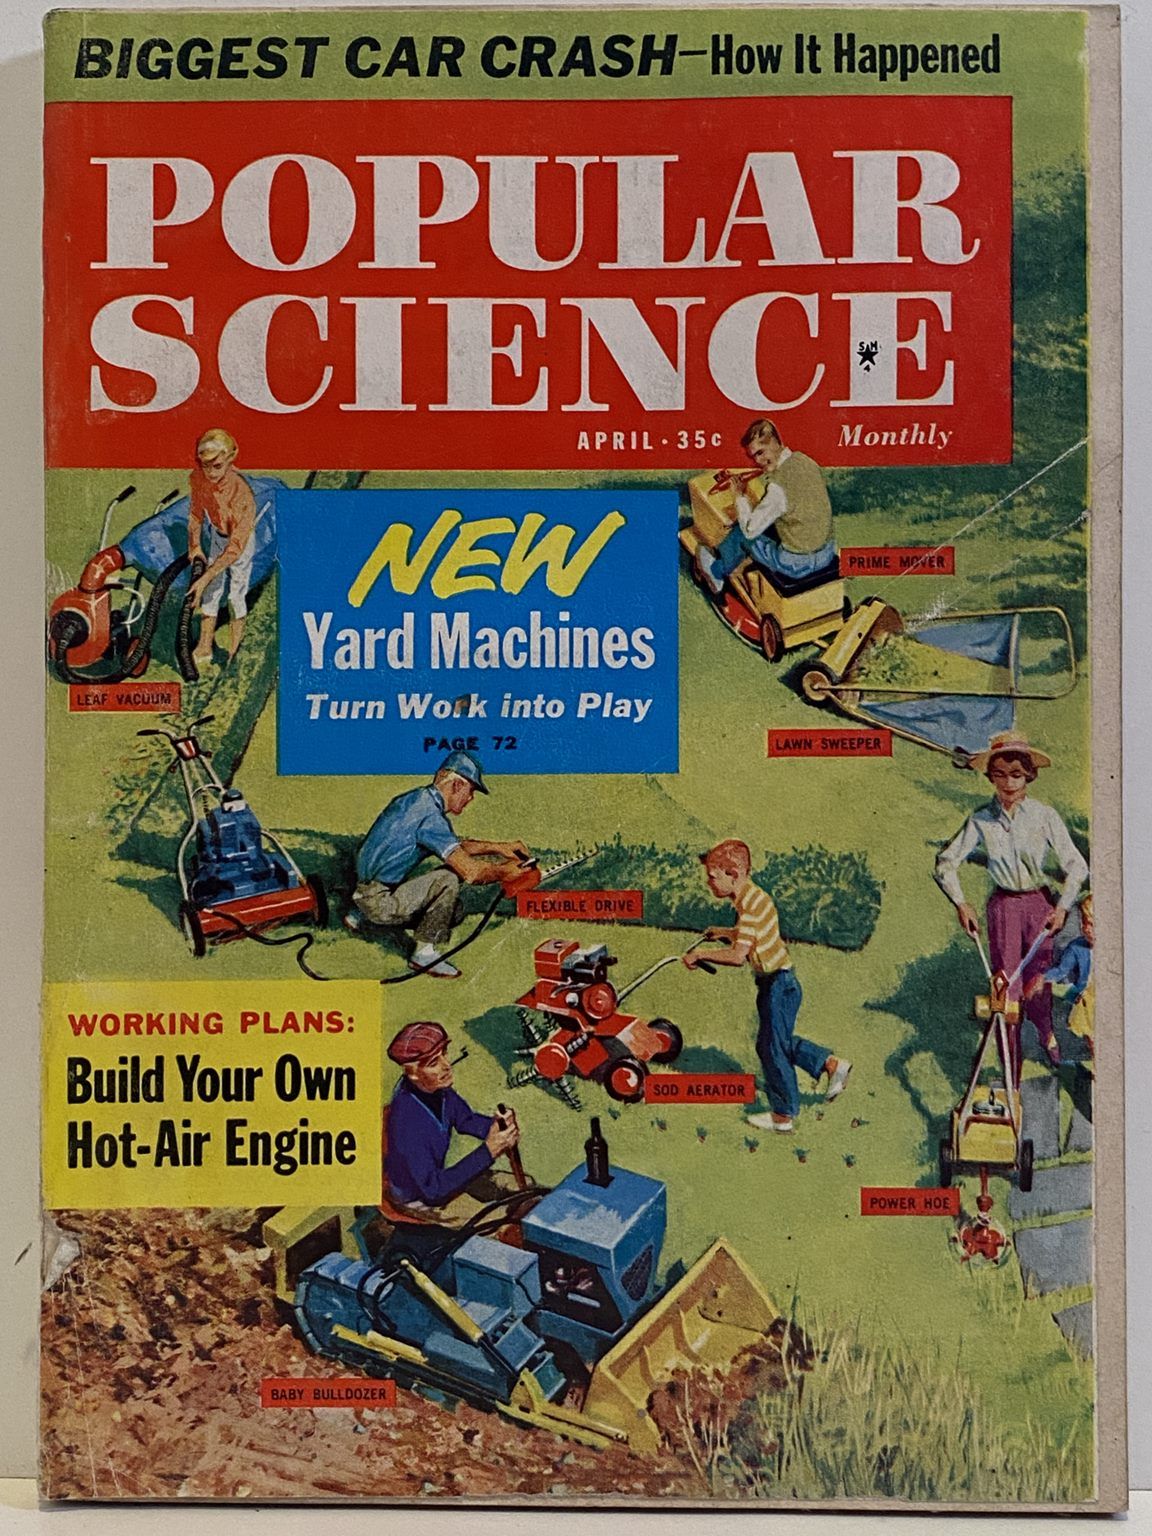 VINTAGE MAGAZINE: Popular Science, Vol. 178, No. 4 - April 1961